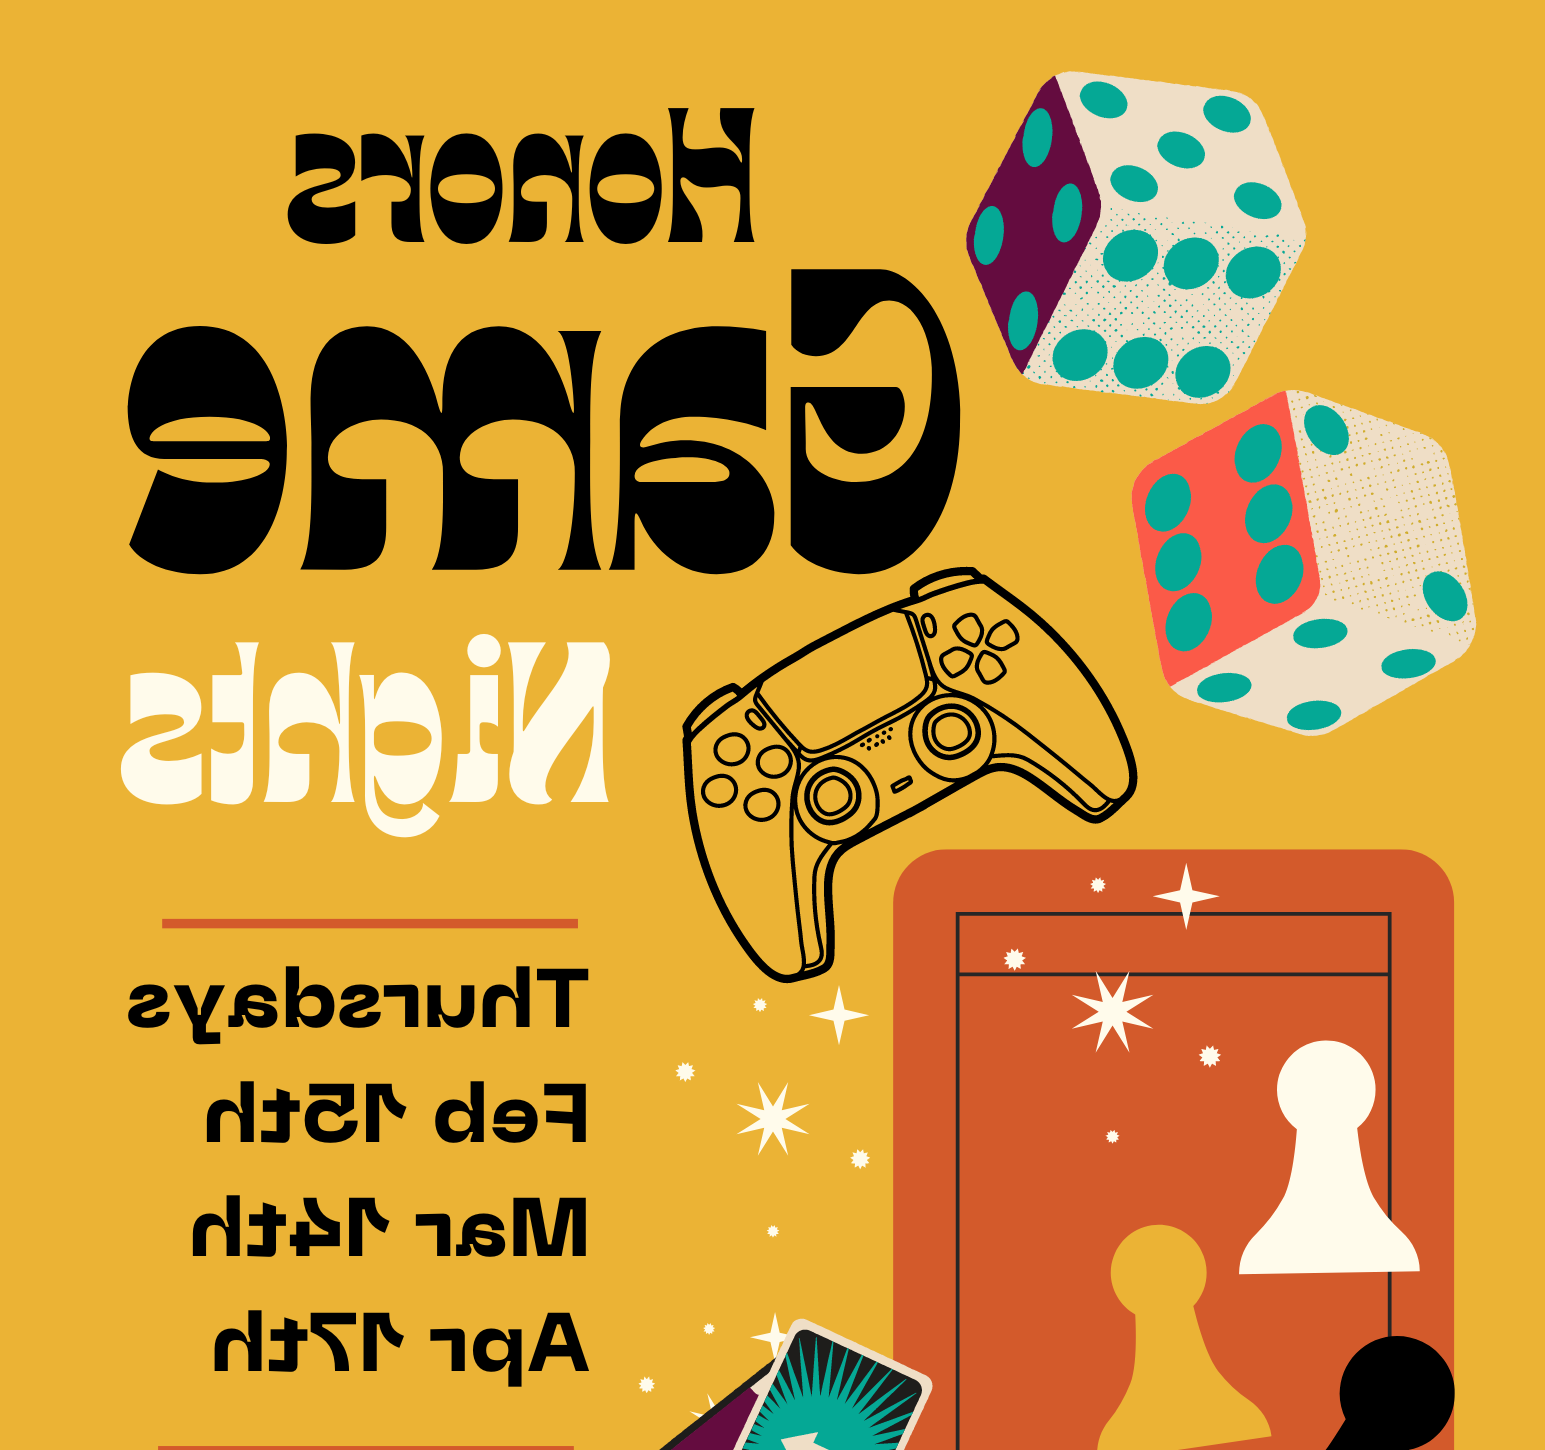 Board Game Night Flyer-2